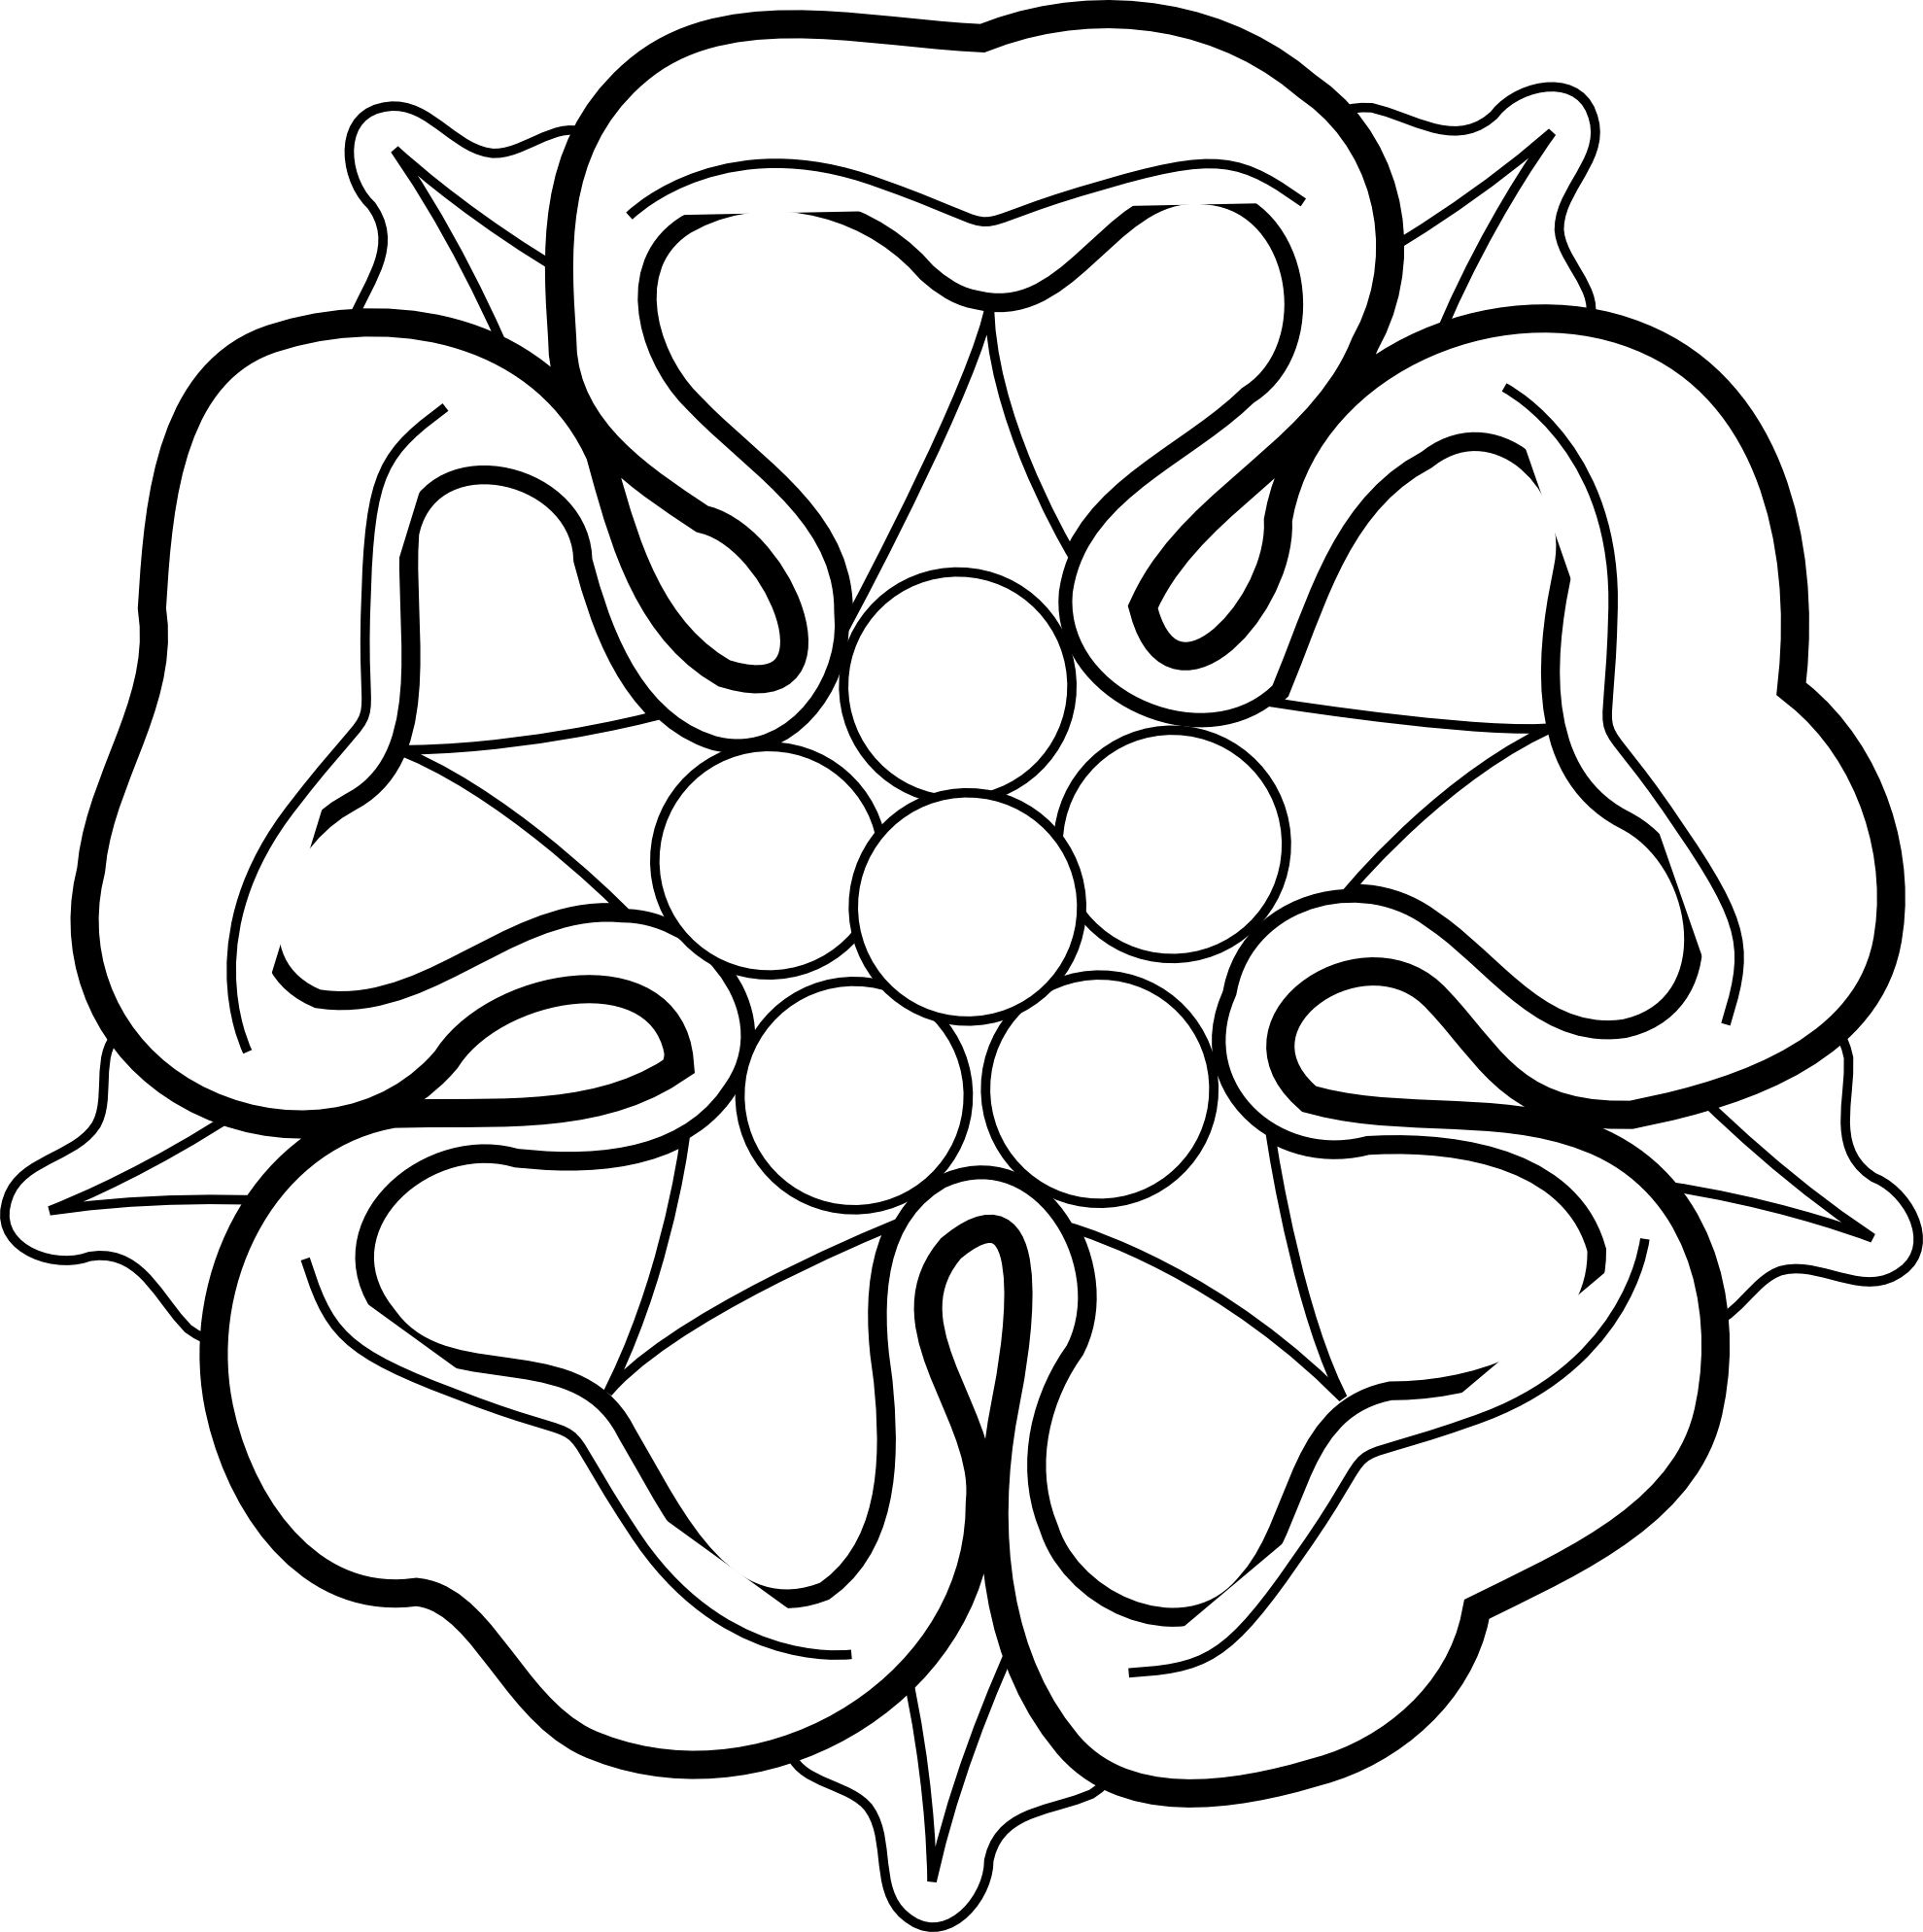 heraldic rose black white line art coloring book ...